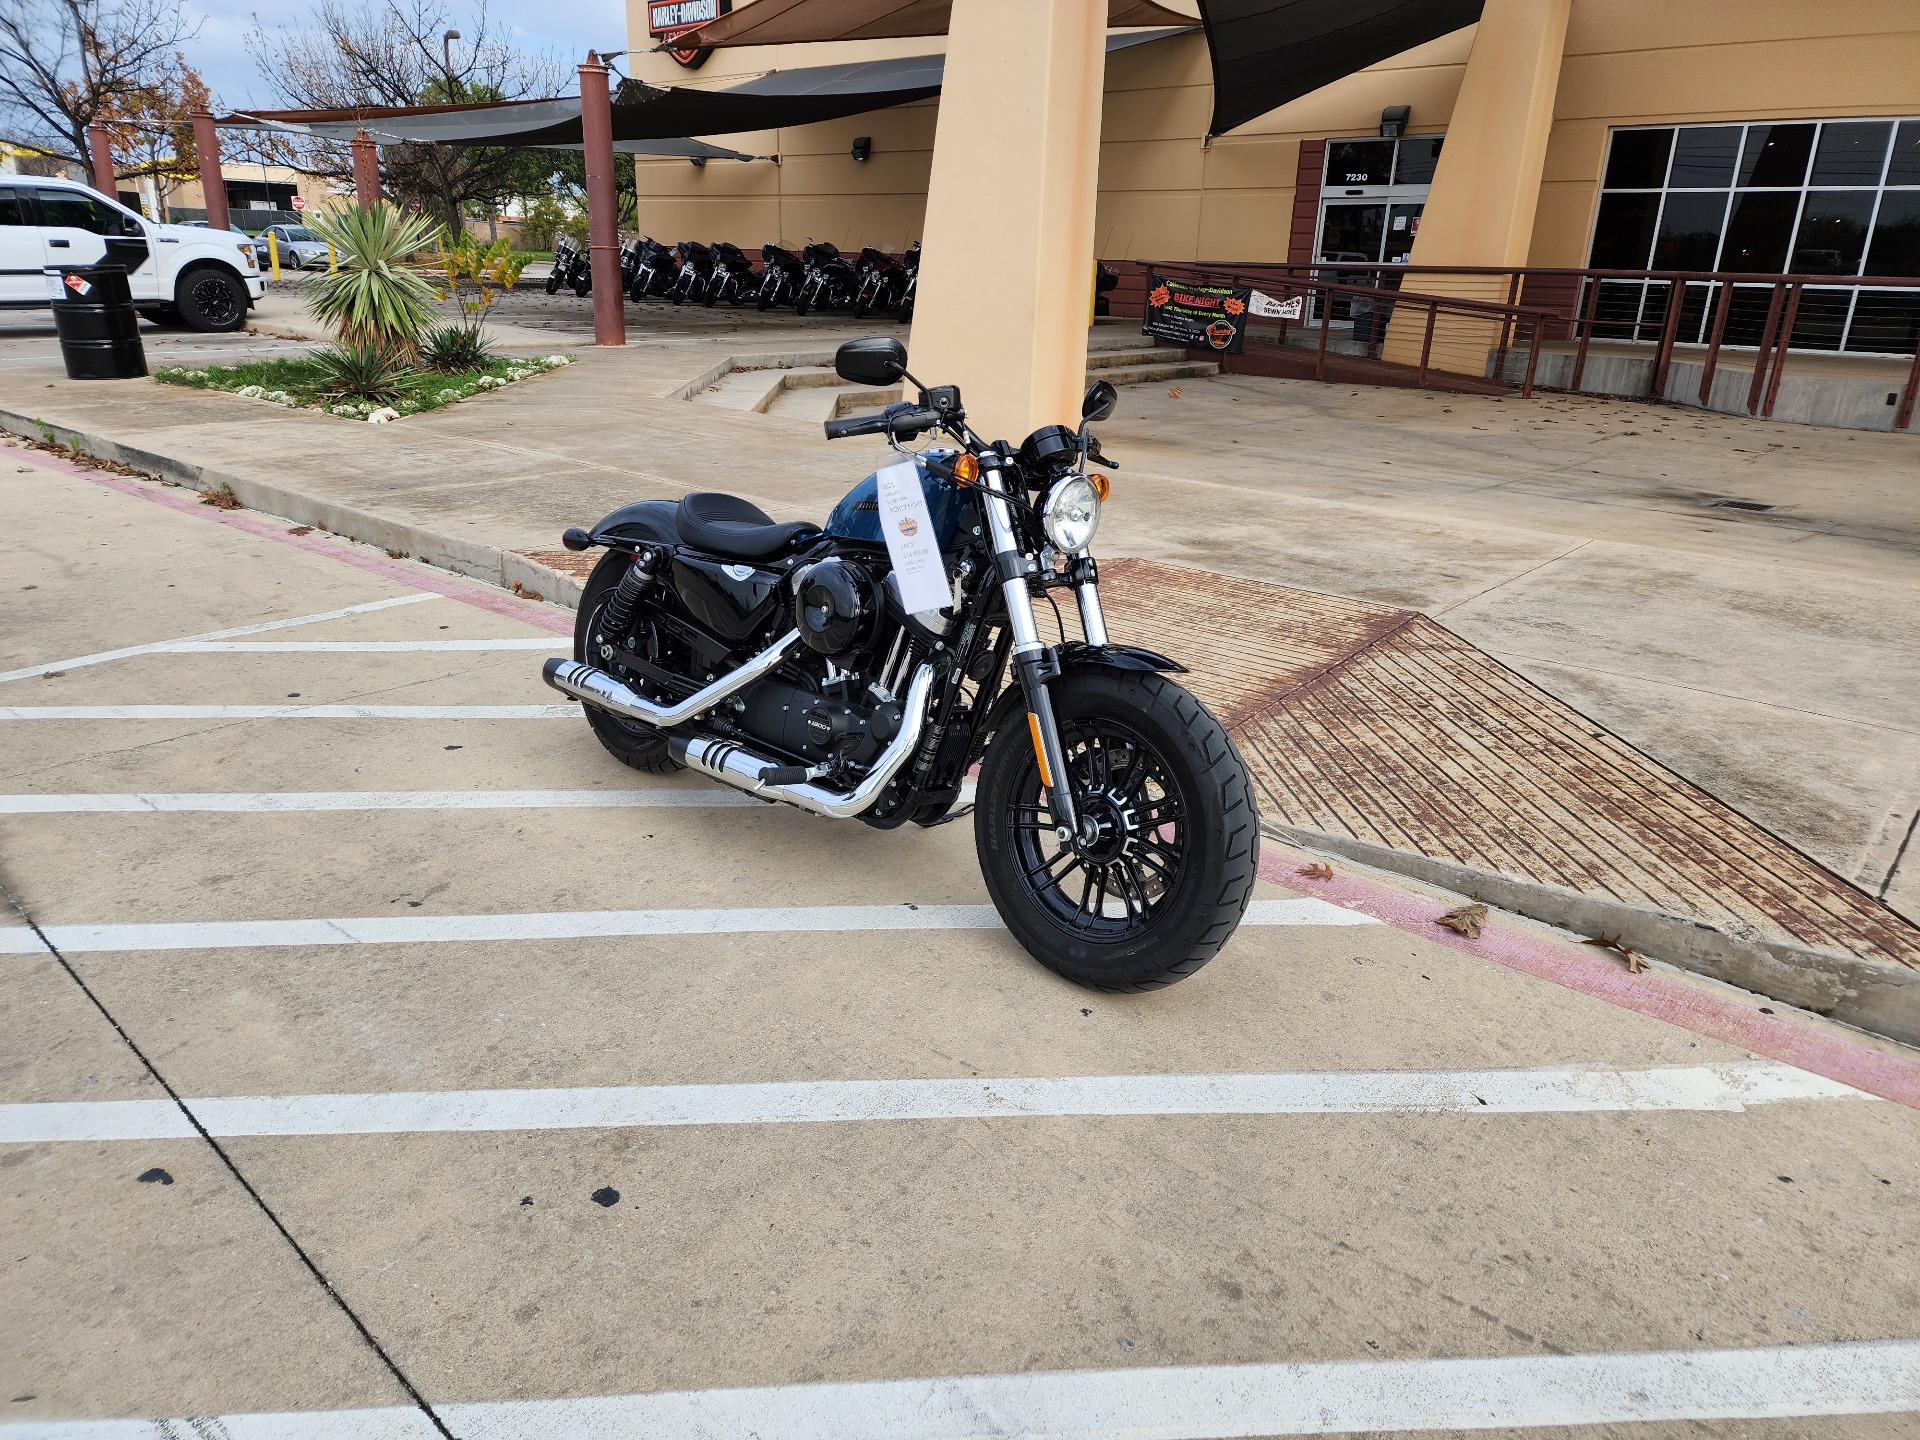 2021 Harley-Davidson Forty-Eight® in San Antonio, Texas - Photo 2